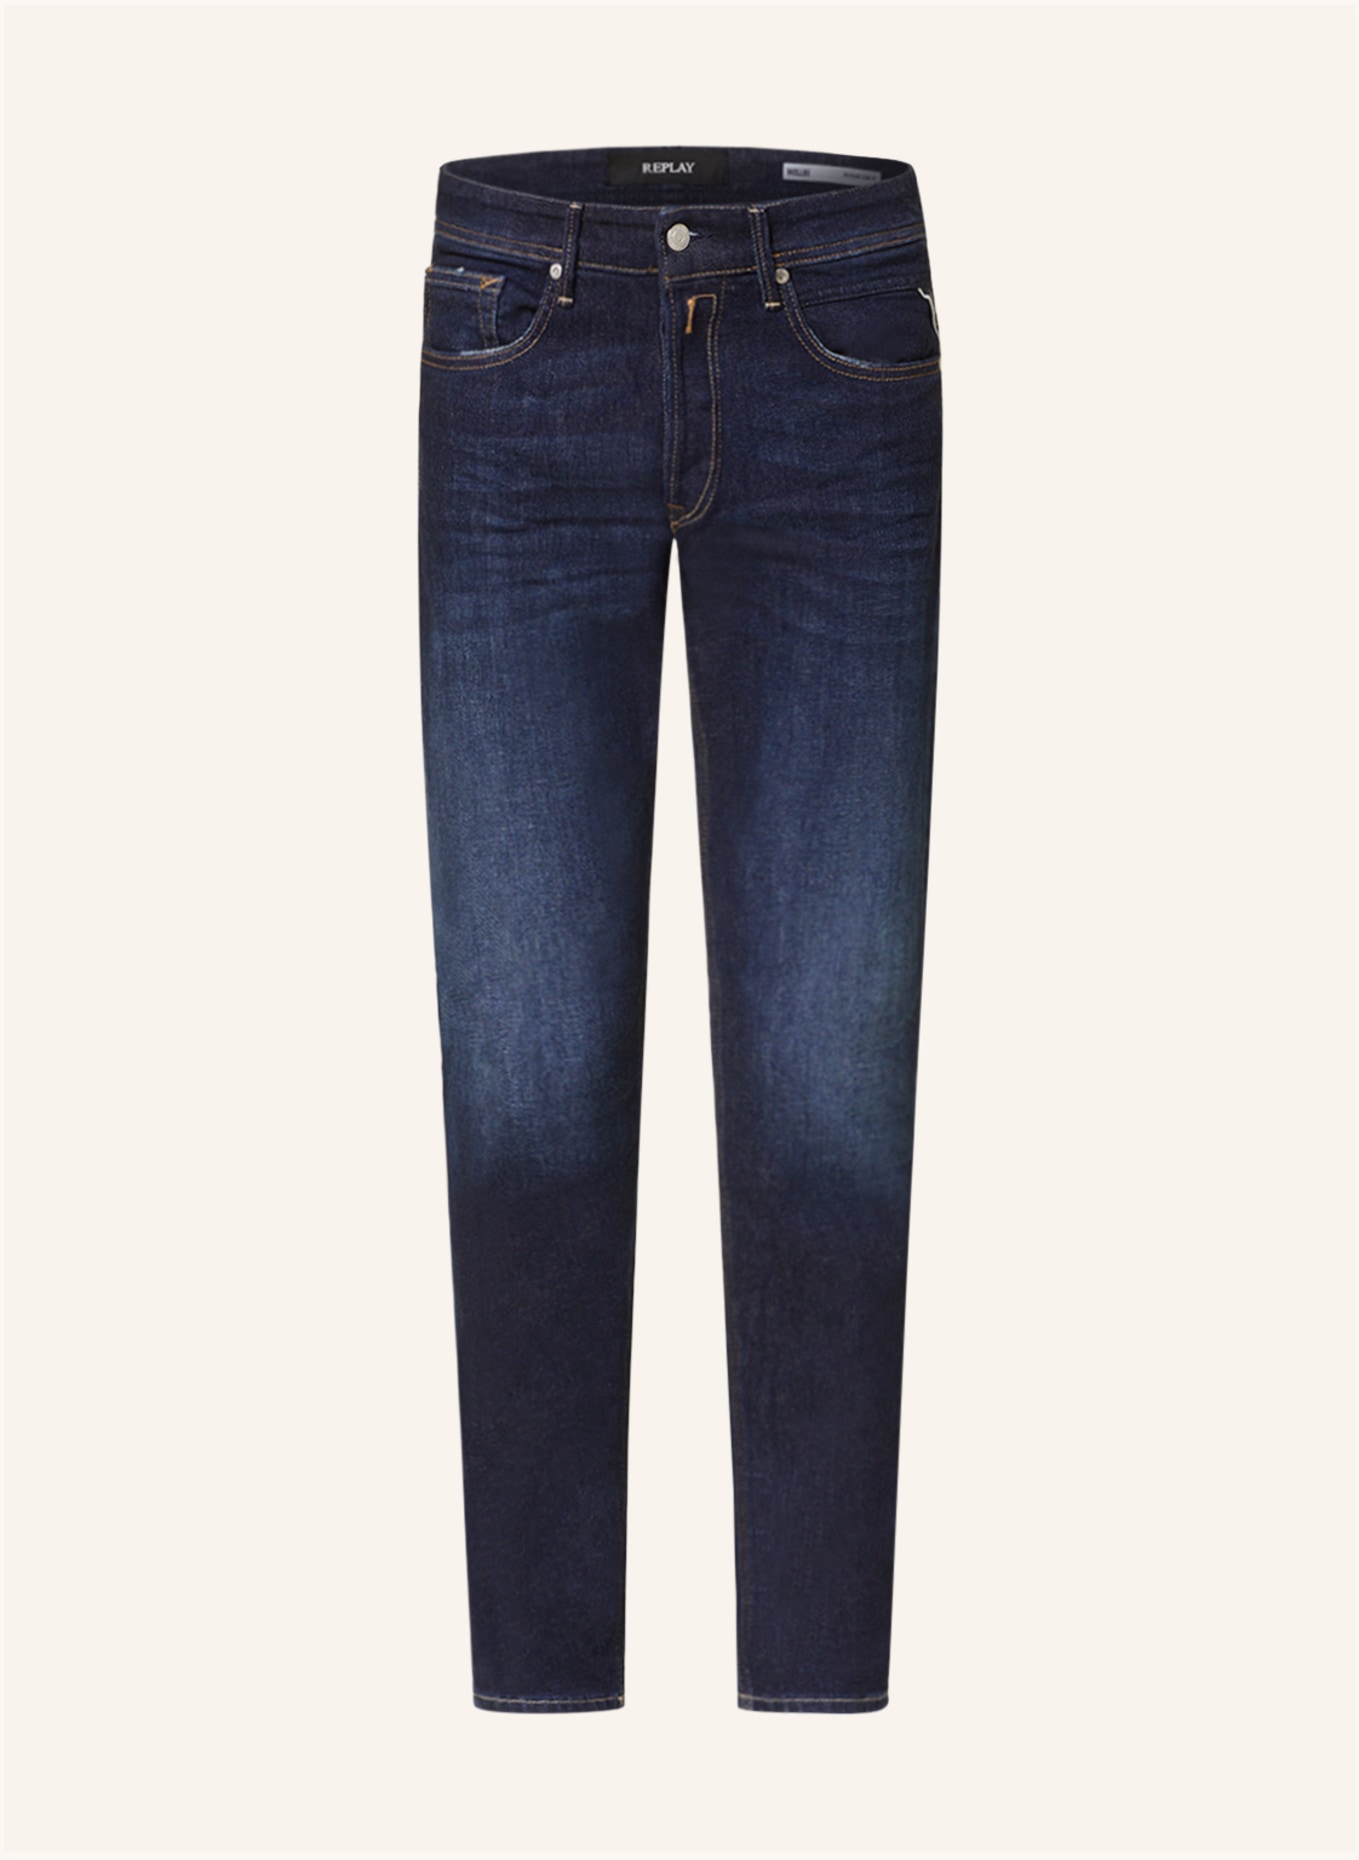 REPLAY Jeans WILLBI Regular Slim Fit, Farbe: 007 DARK BLUE (Bild 1)